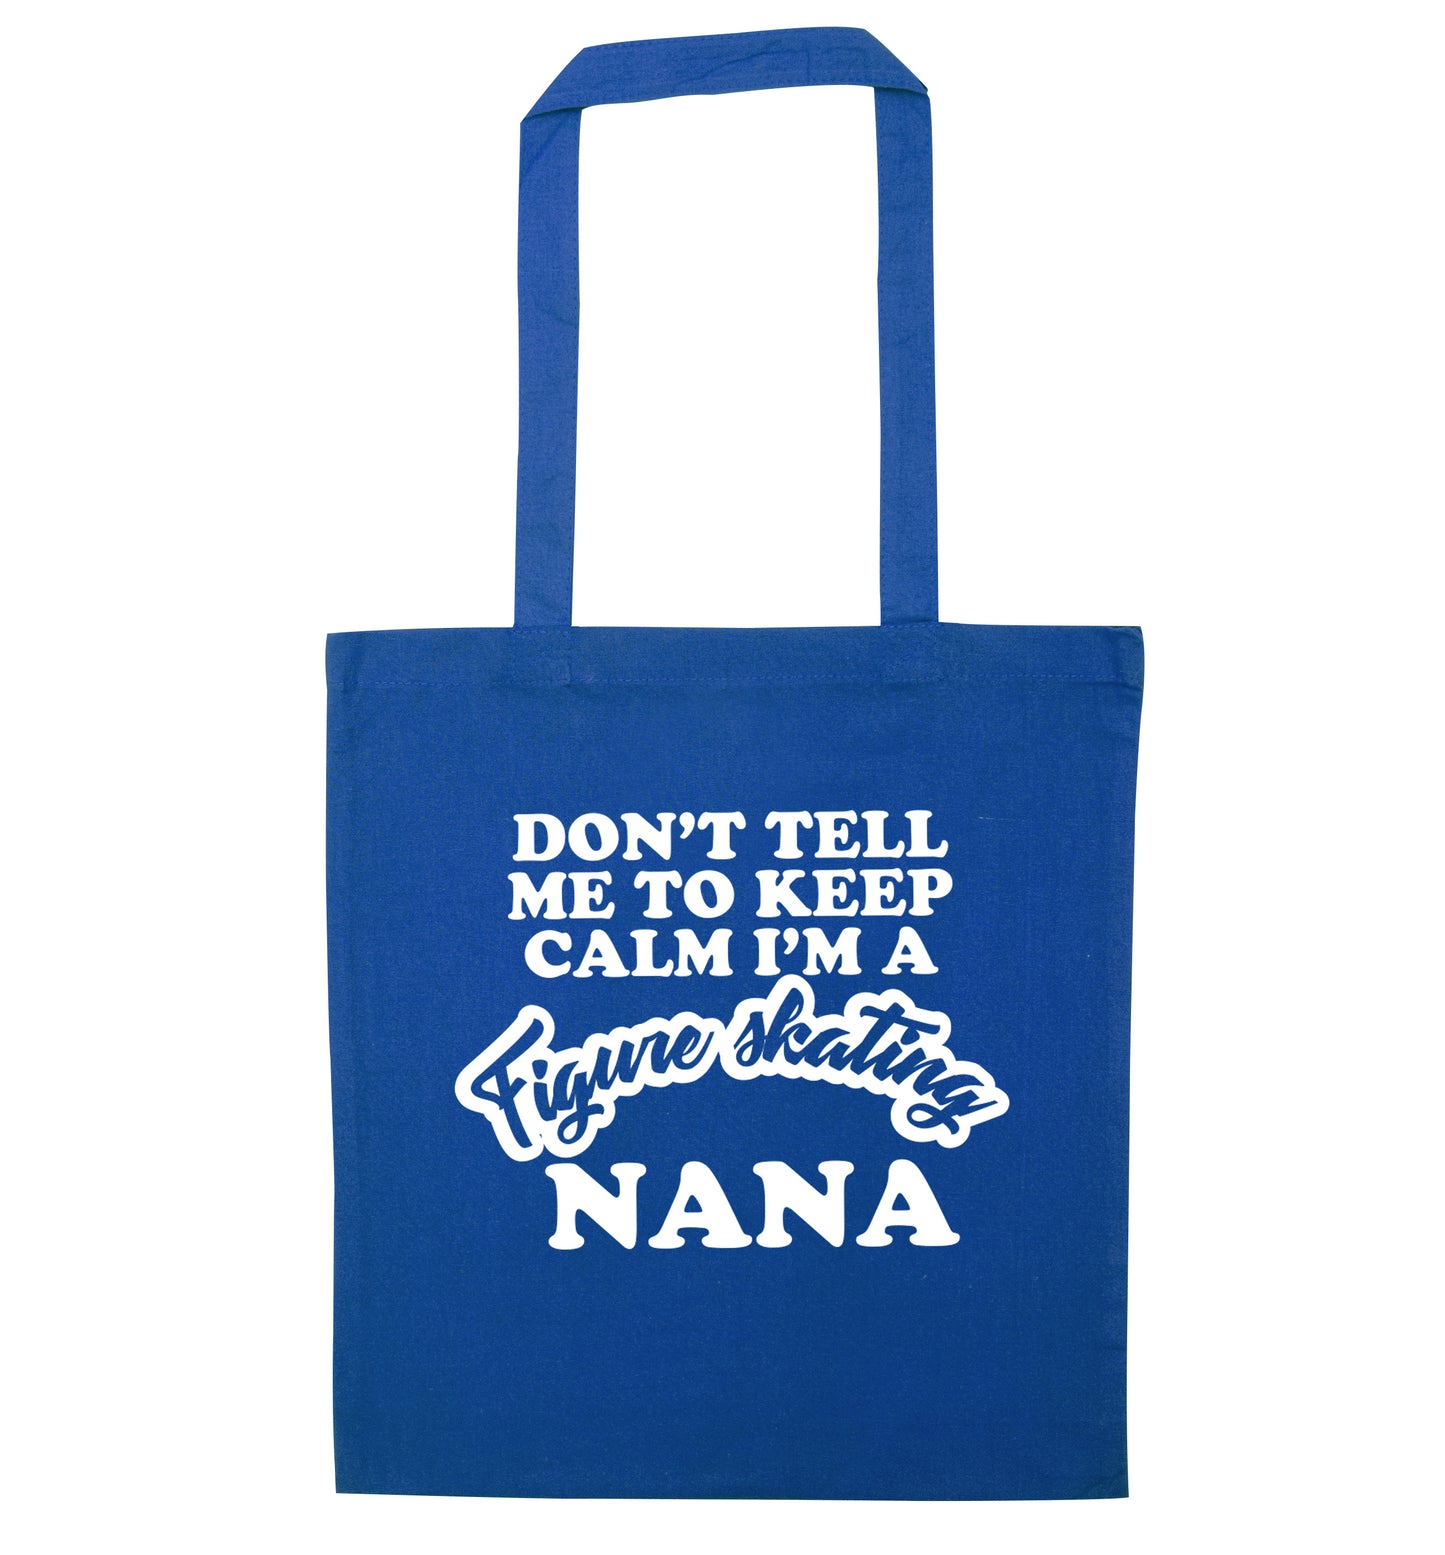 Don't tell me to keep calm I'm a figure skating nana blue tote bag